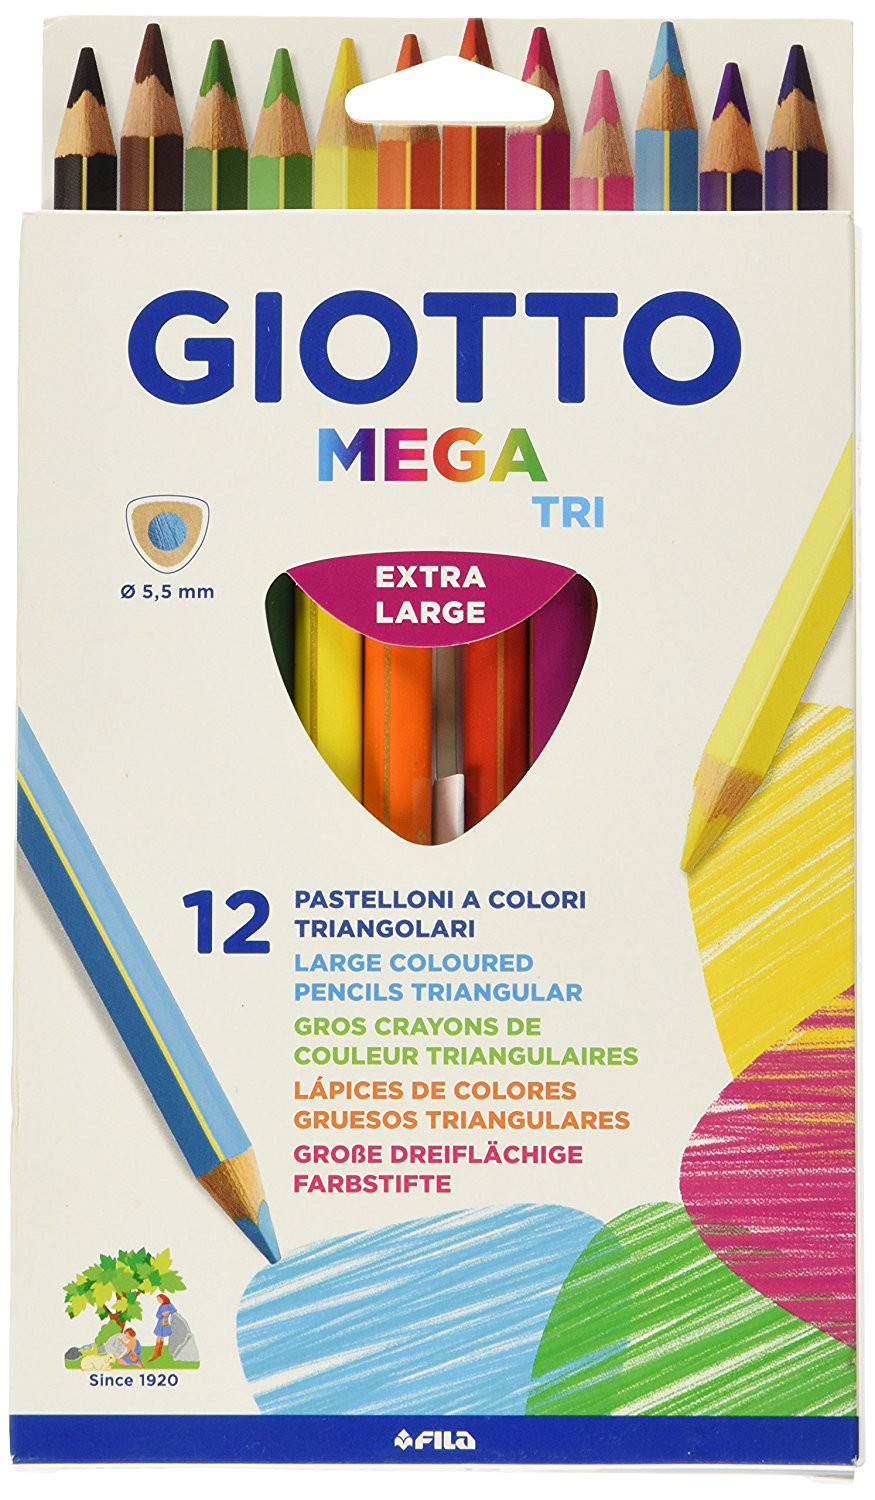 Giotto Mega TRI Buntstifte / Farbstifte